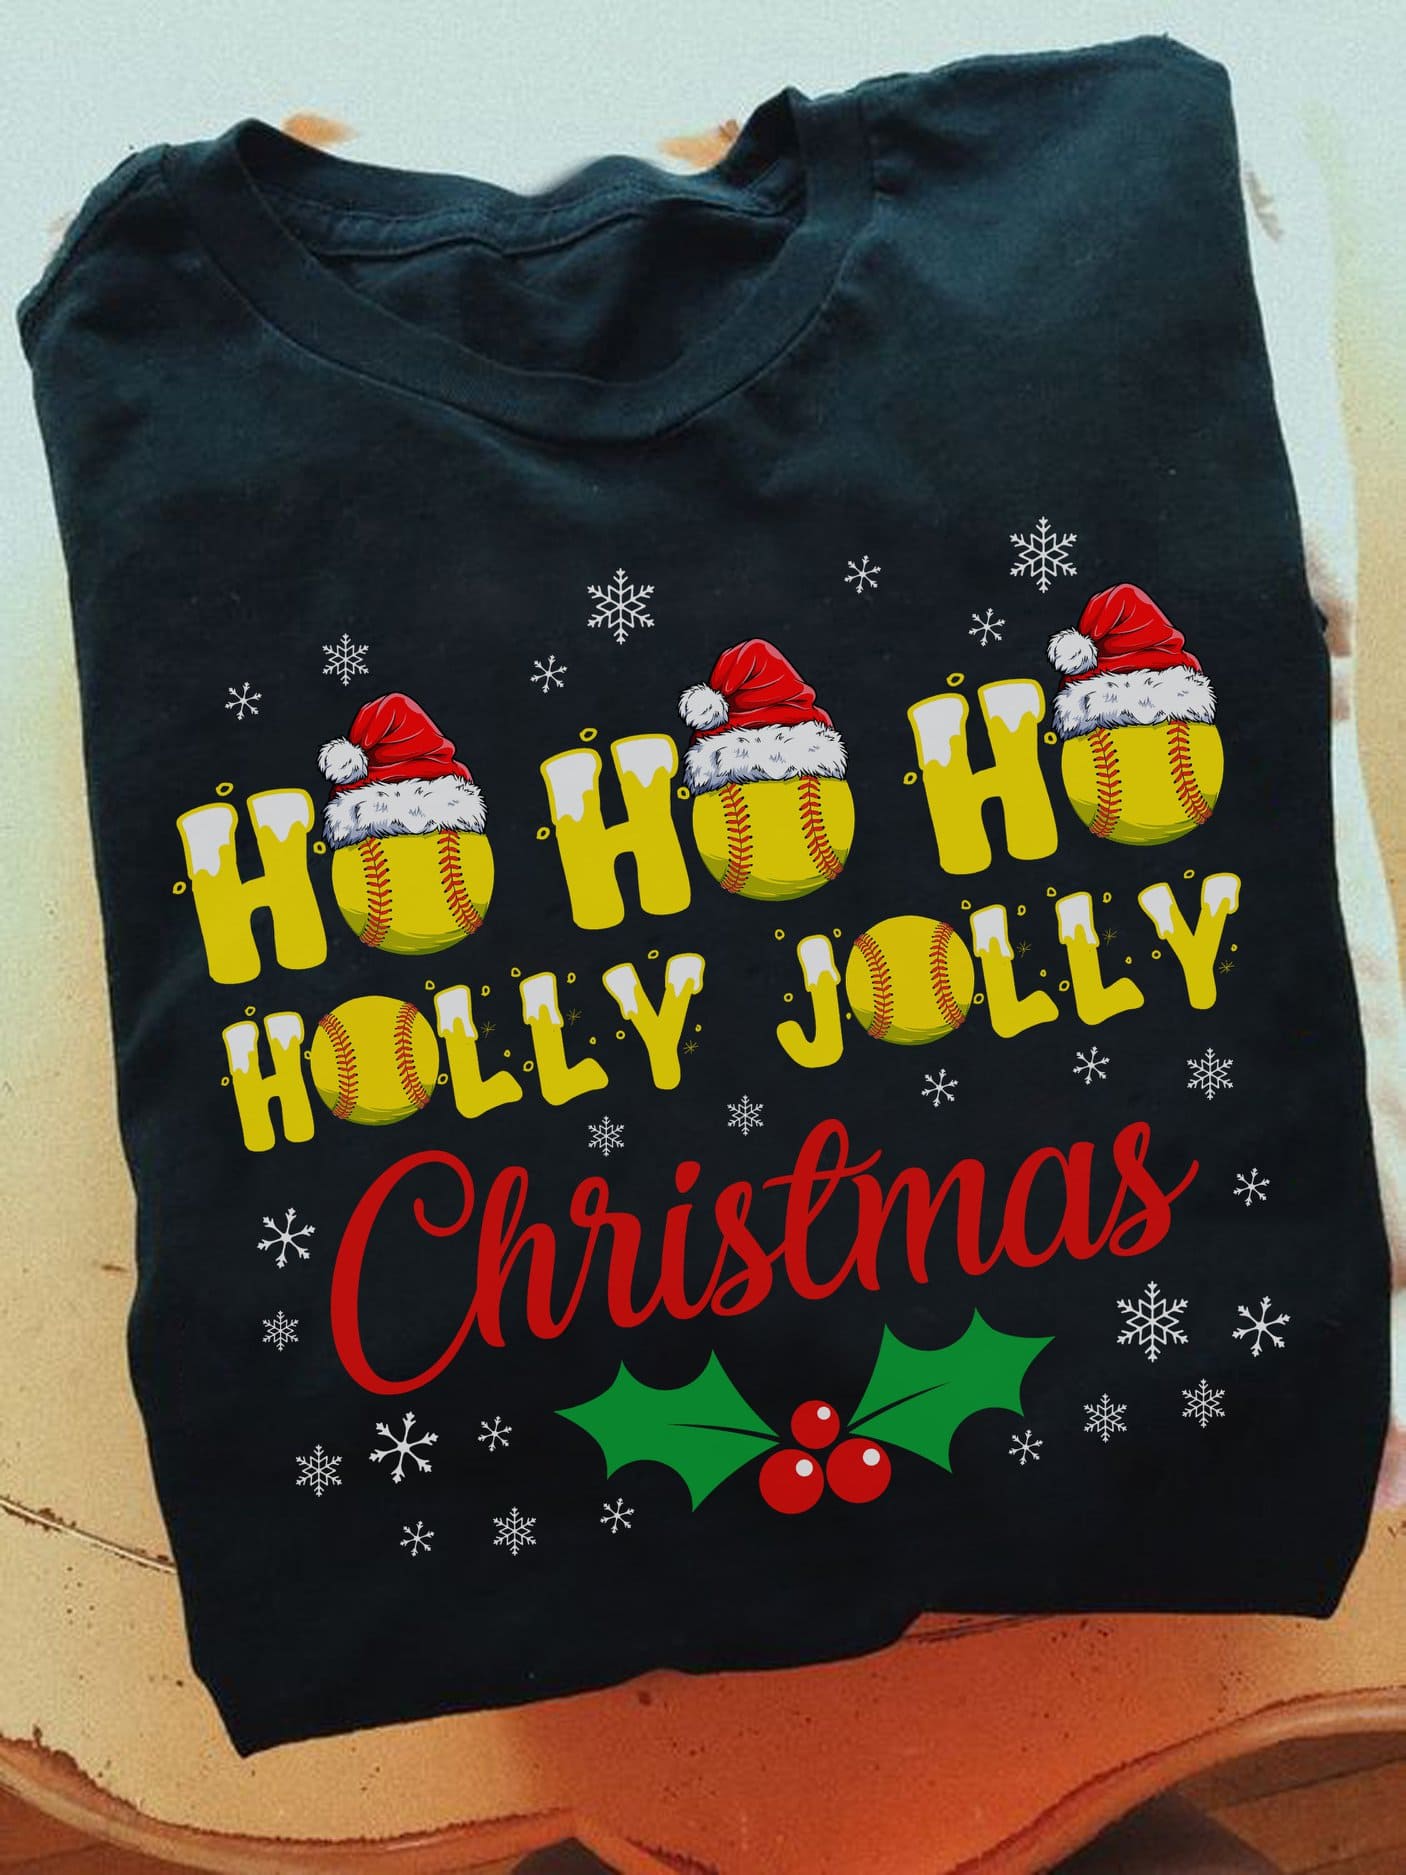 Ho ho ho holly jolly Christmas - Christmas ugly sweater, Softball player T-shirt